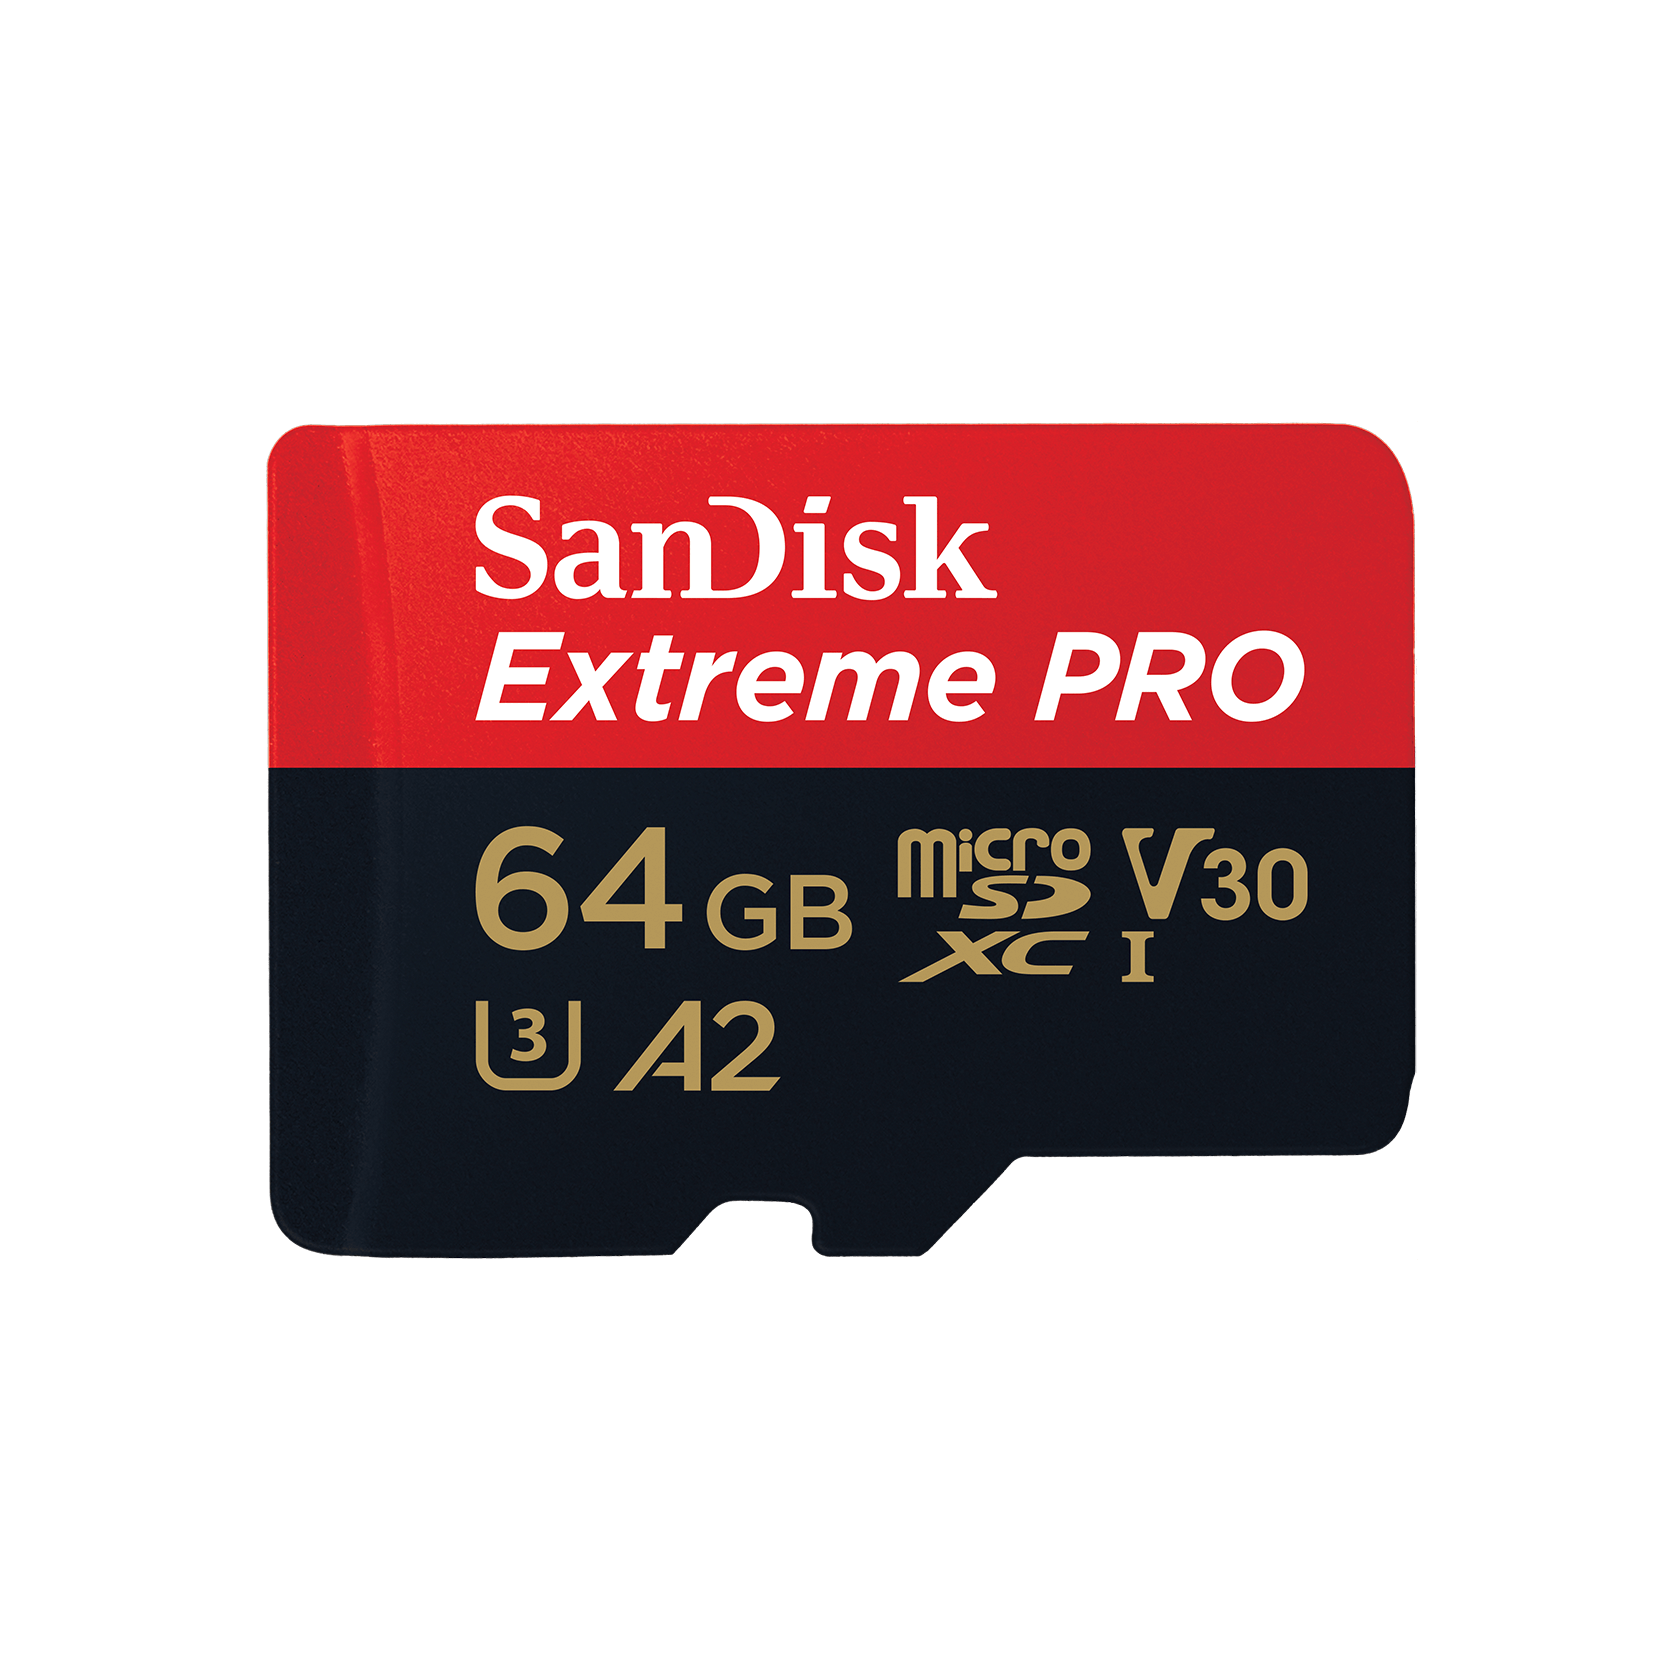 SanDisk Extreme PRO UHS-I Card - 64GB MicroSD Card - SDSQXCU-064G-GN6MA